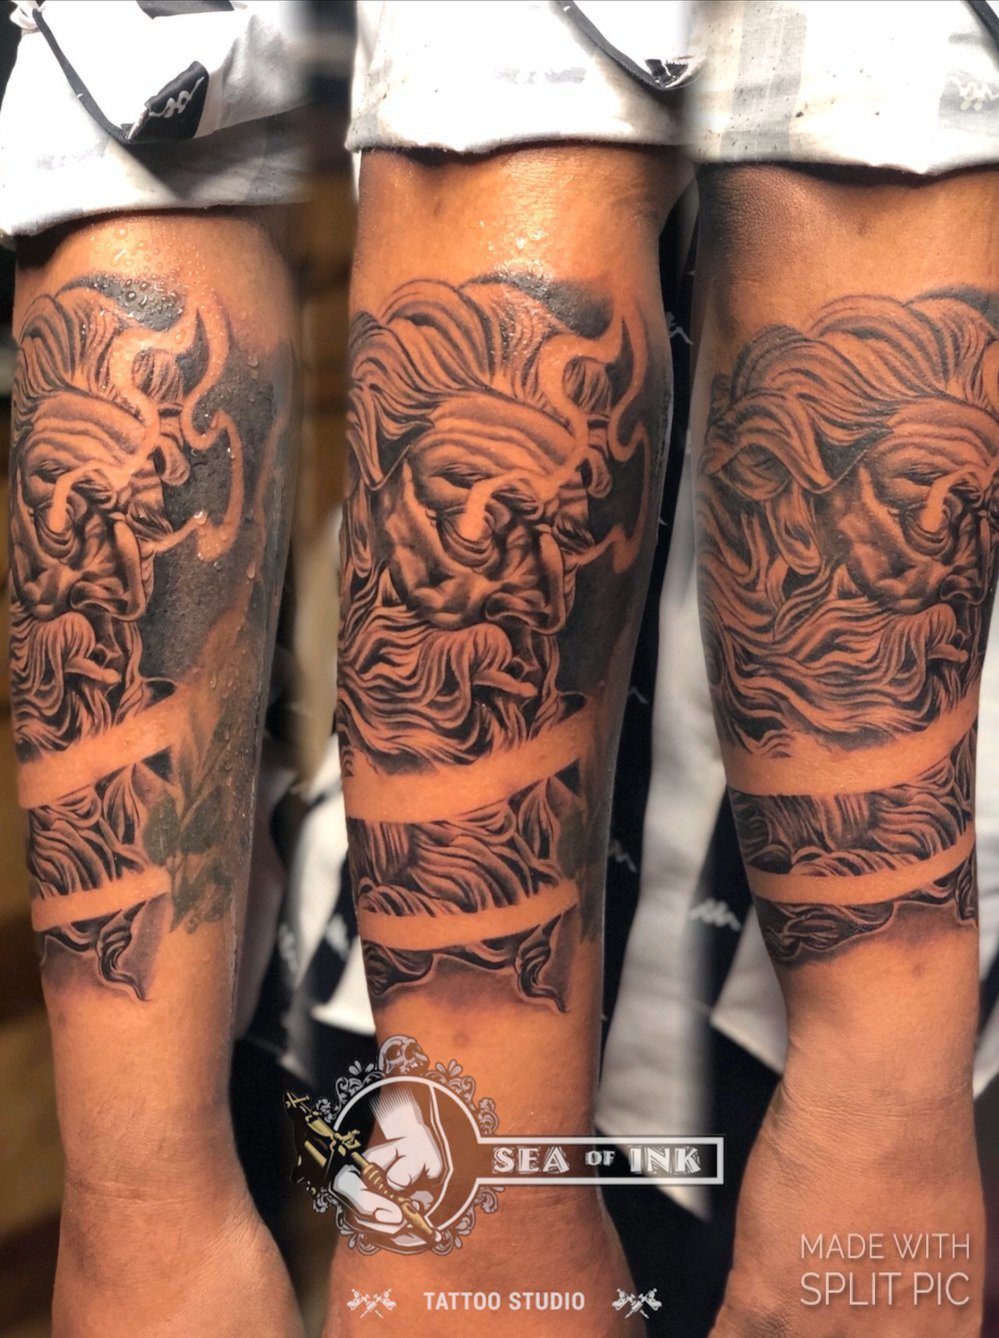 Sea Of Ink Tattoo Studio cover